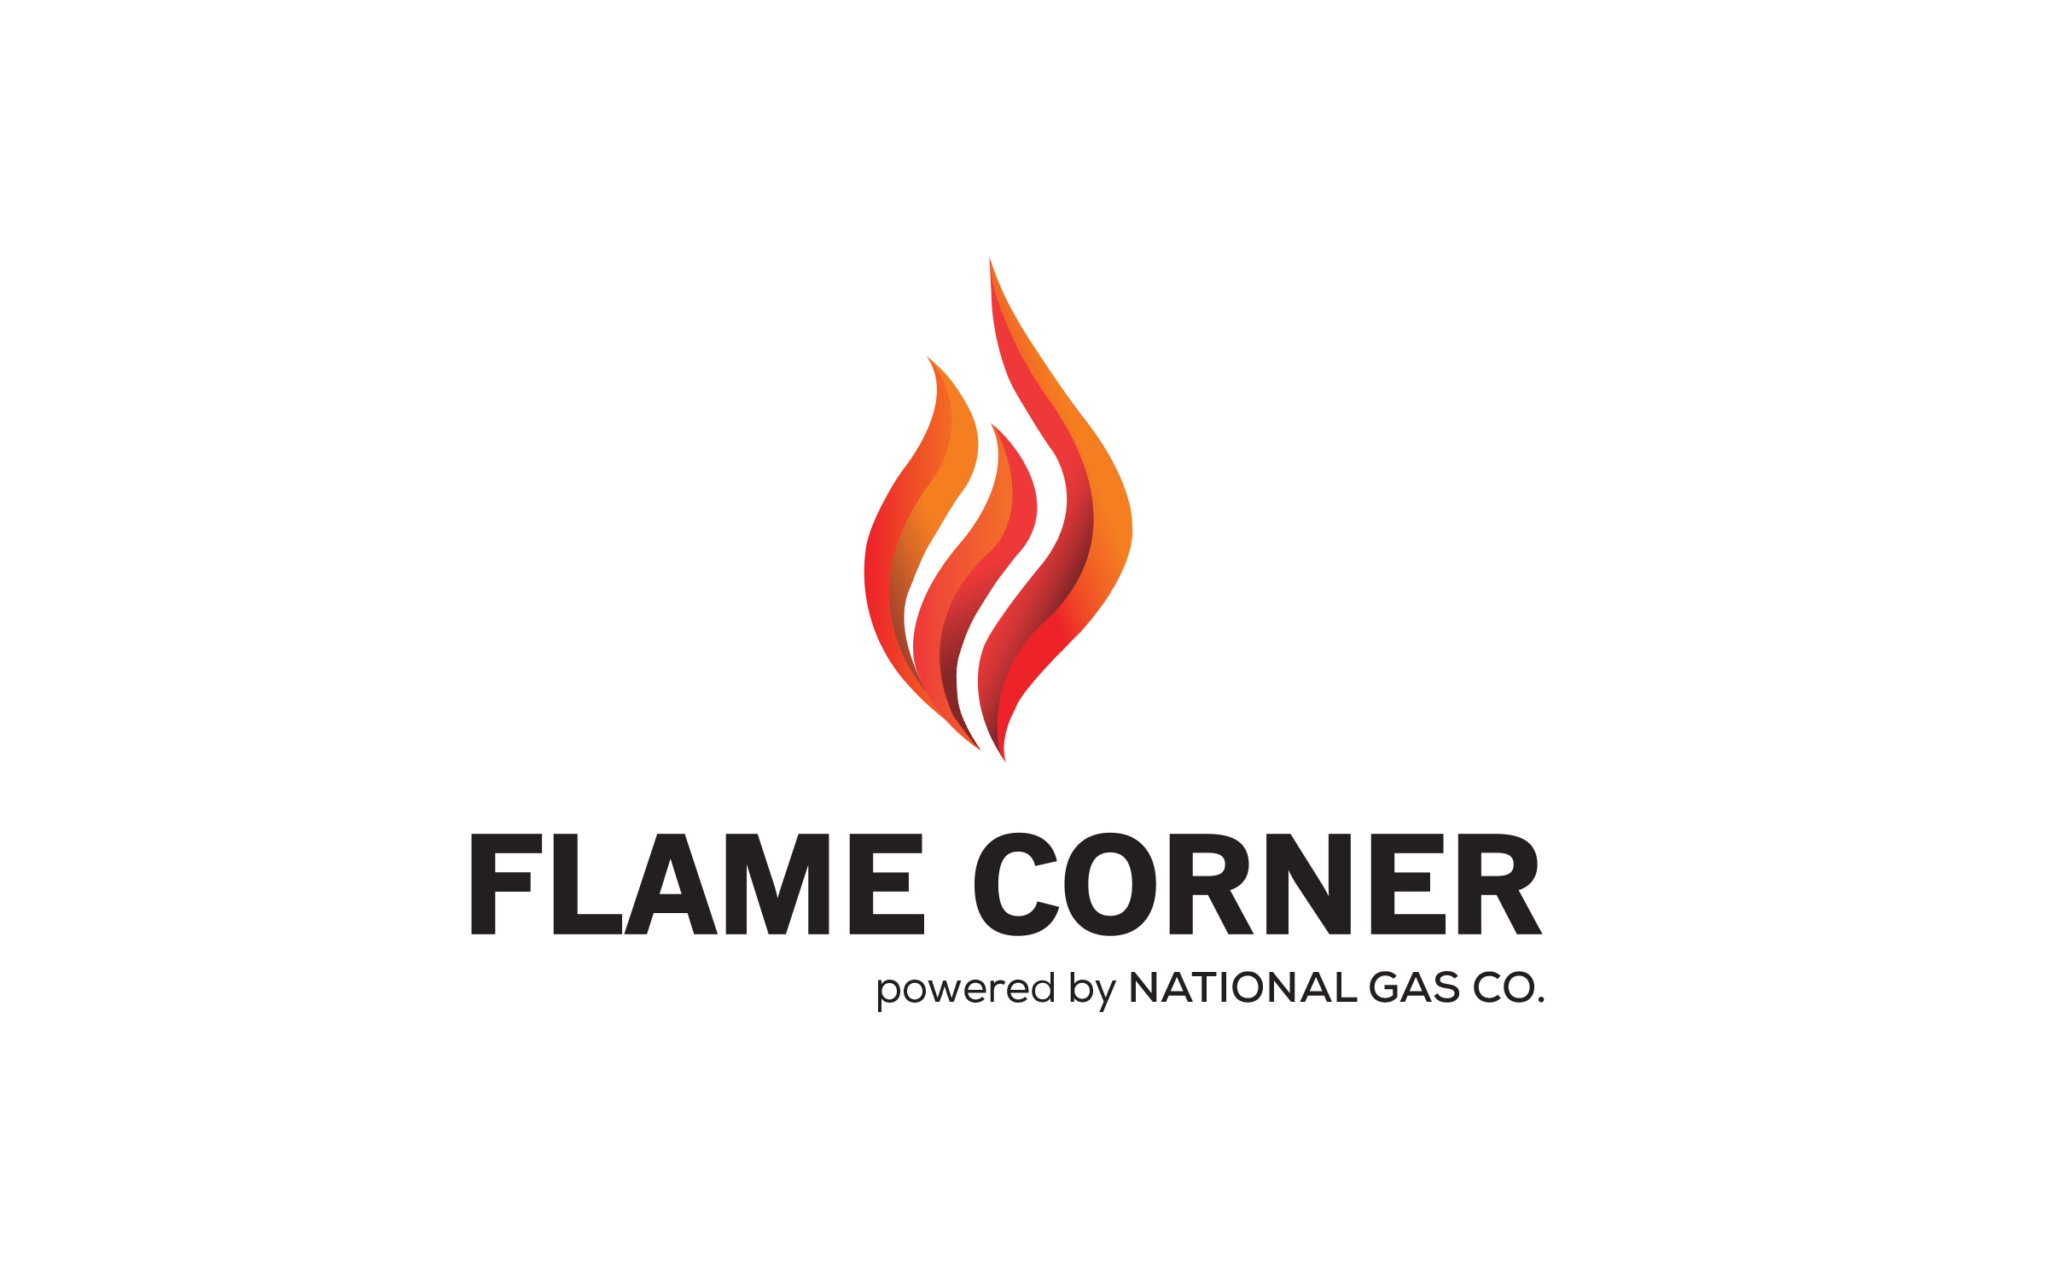 11.Flame Corner